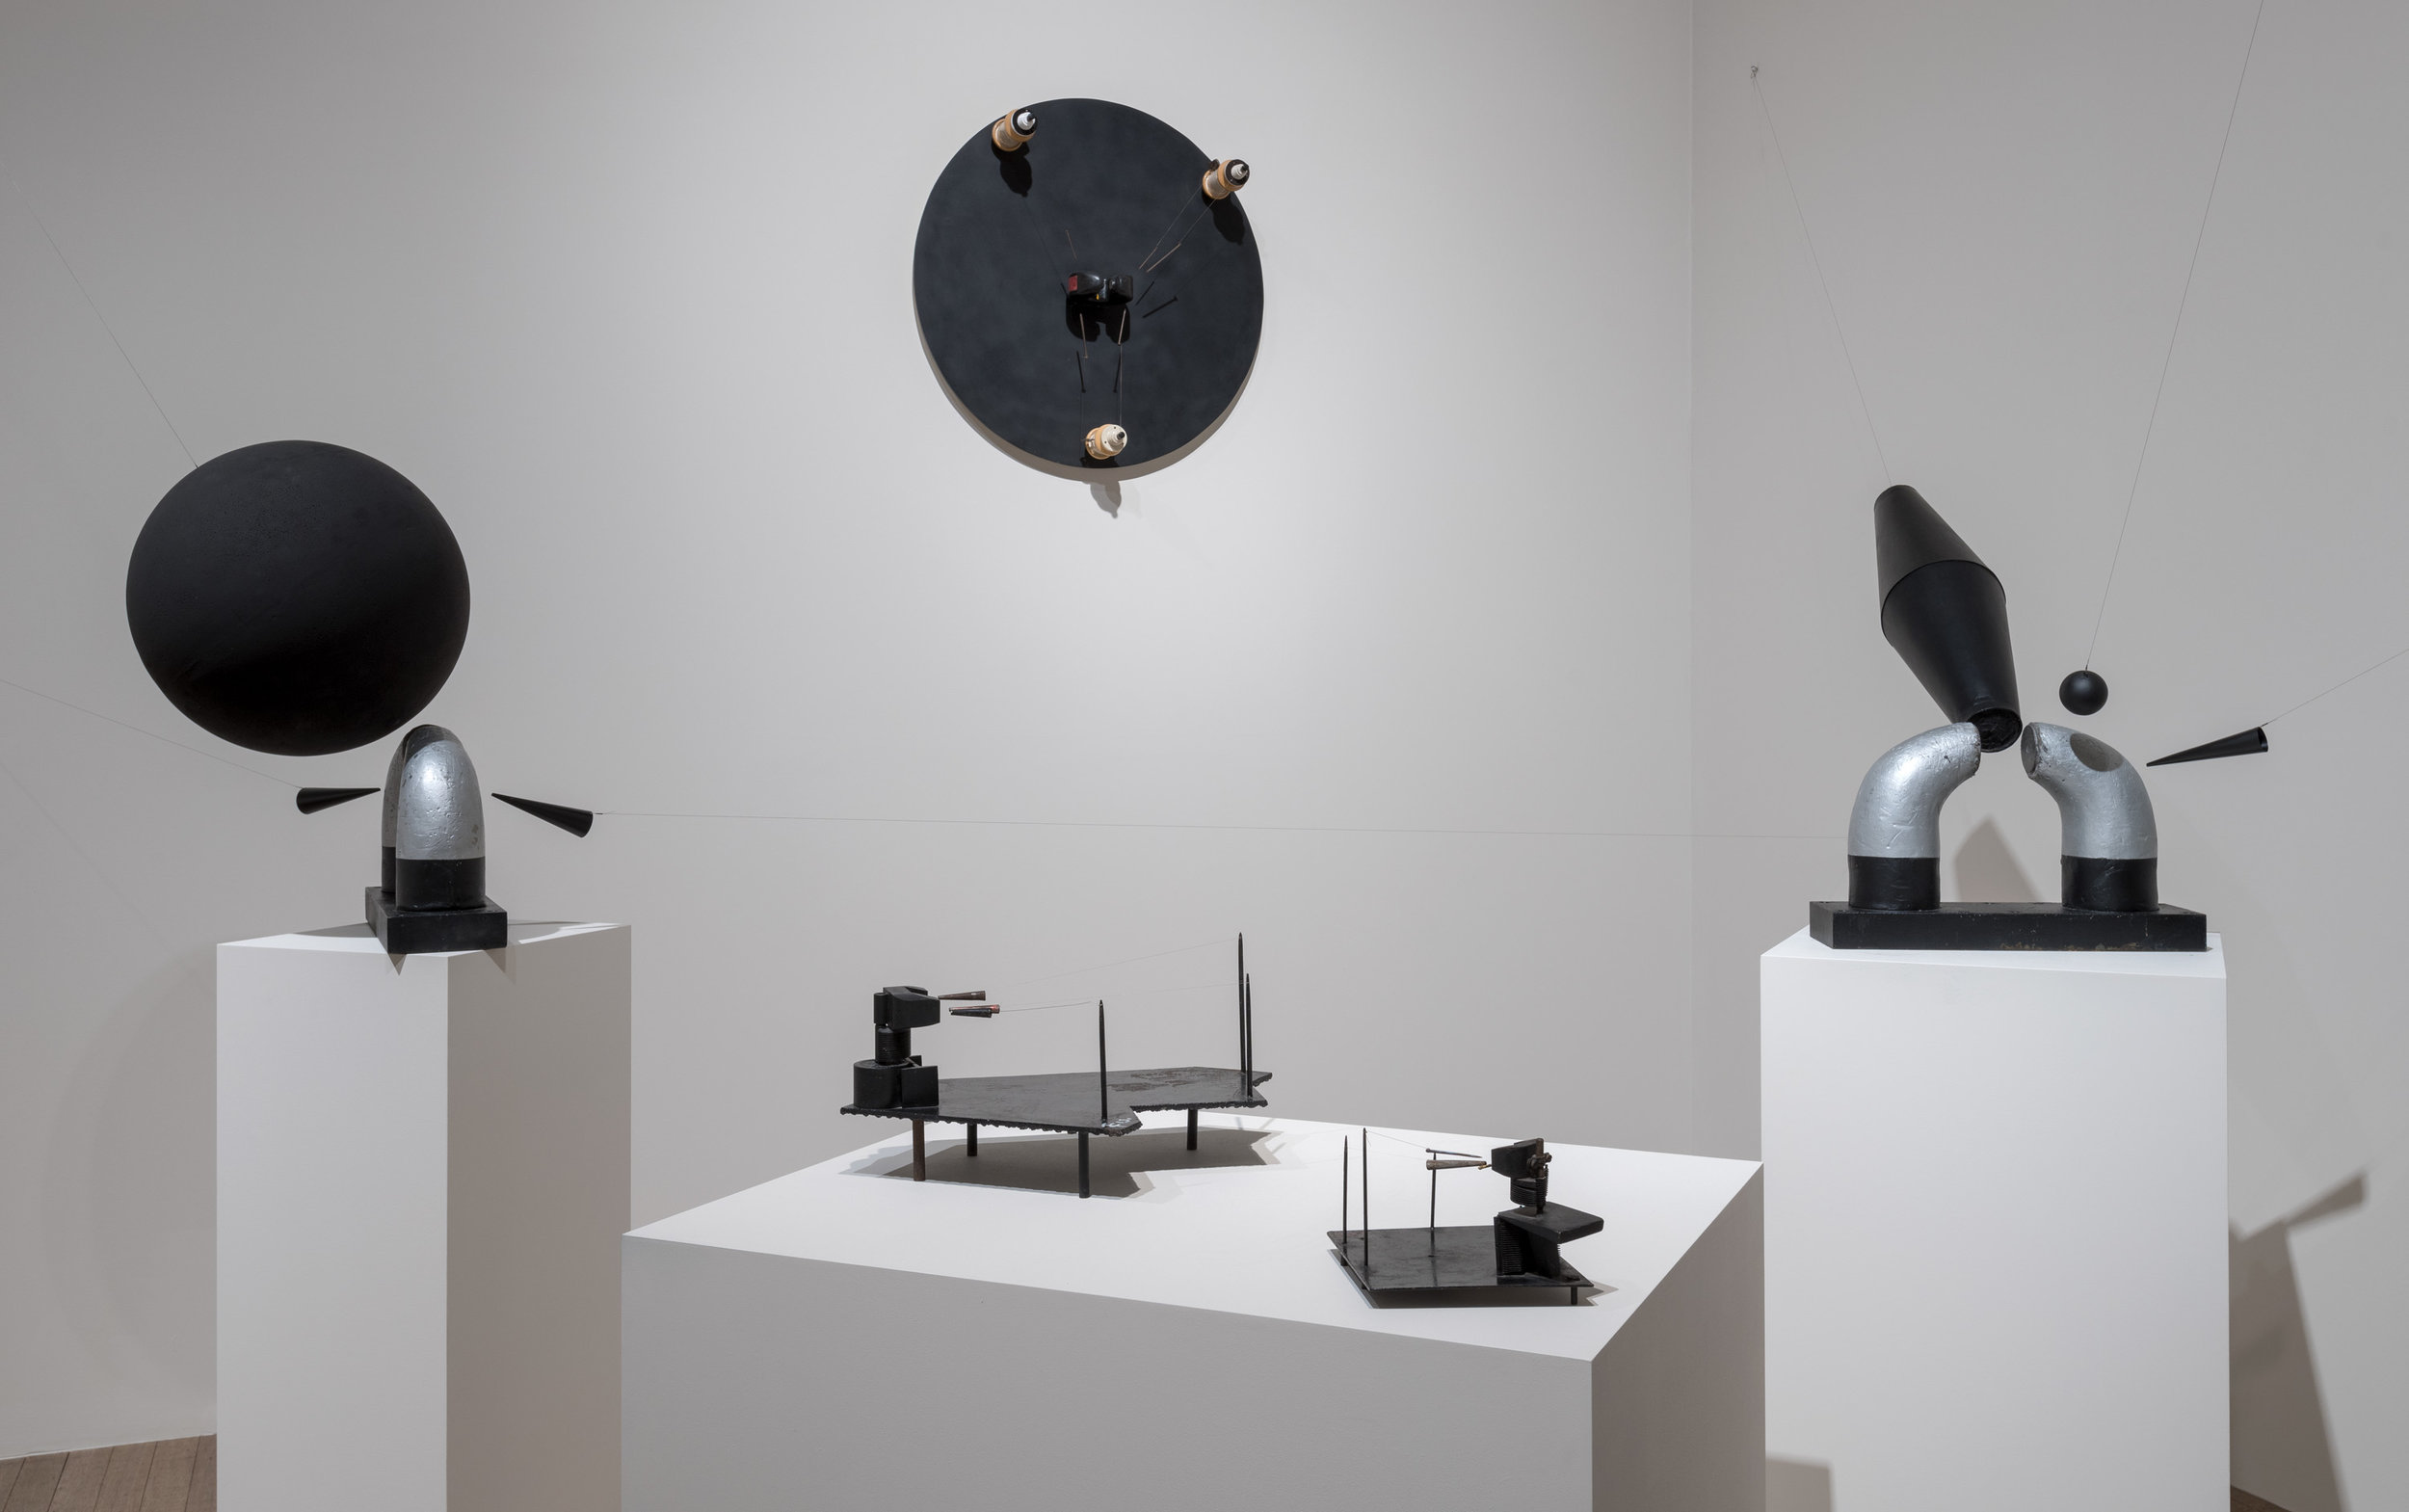   Takis  installation view, Tate Modern, 2019. Photo: Tate Photography (Mark Heathcote) 